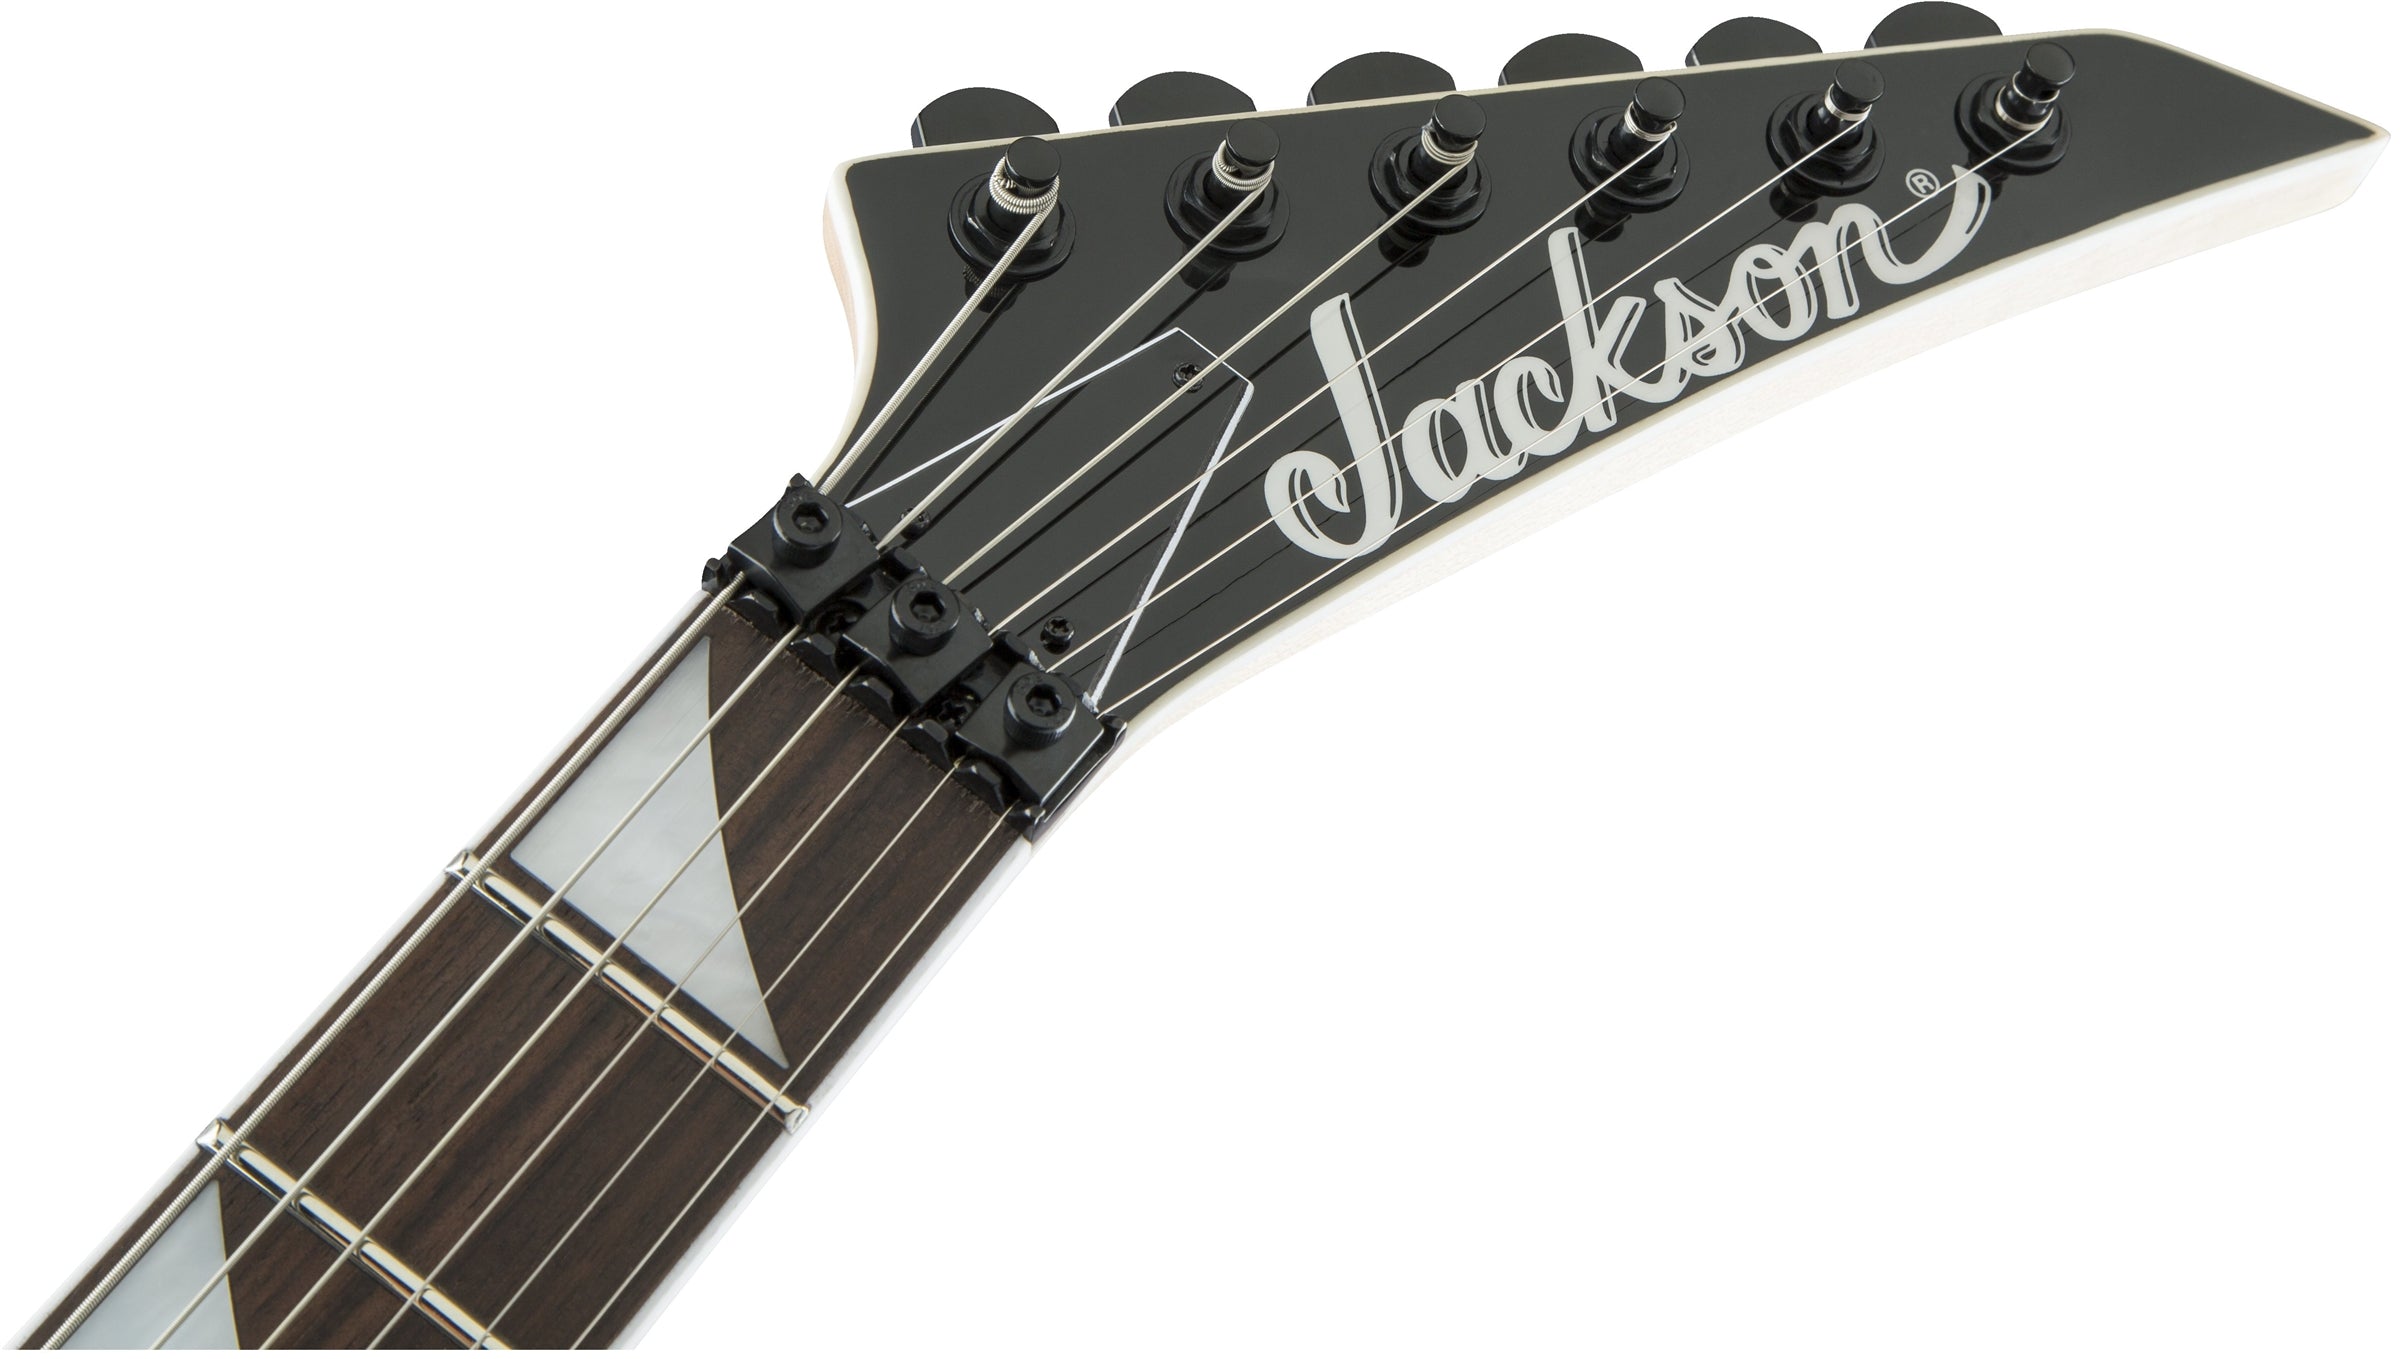 Jackson Dinky JS32 DKA Arch Top Electric Guitar Bright Blue